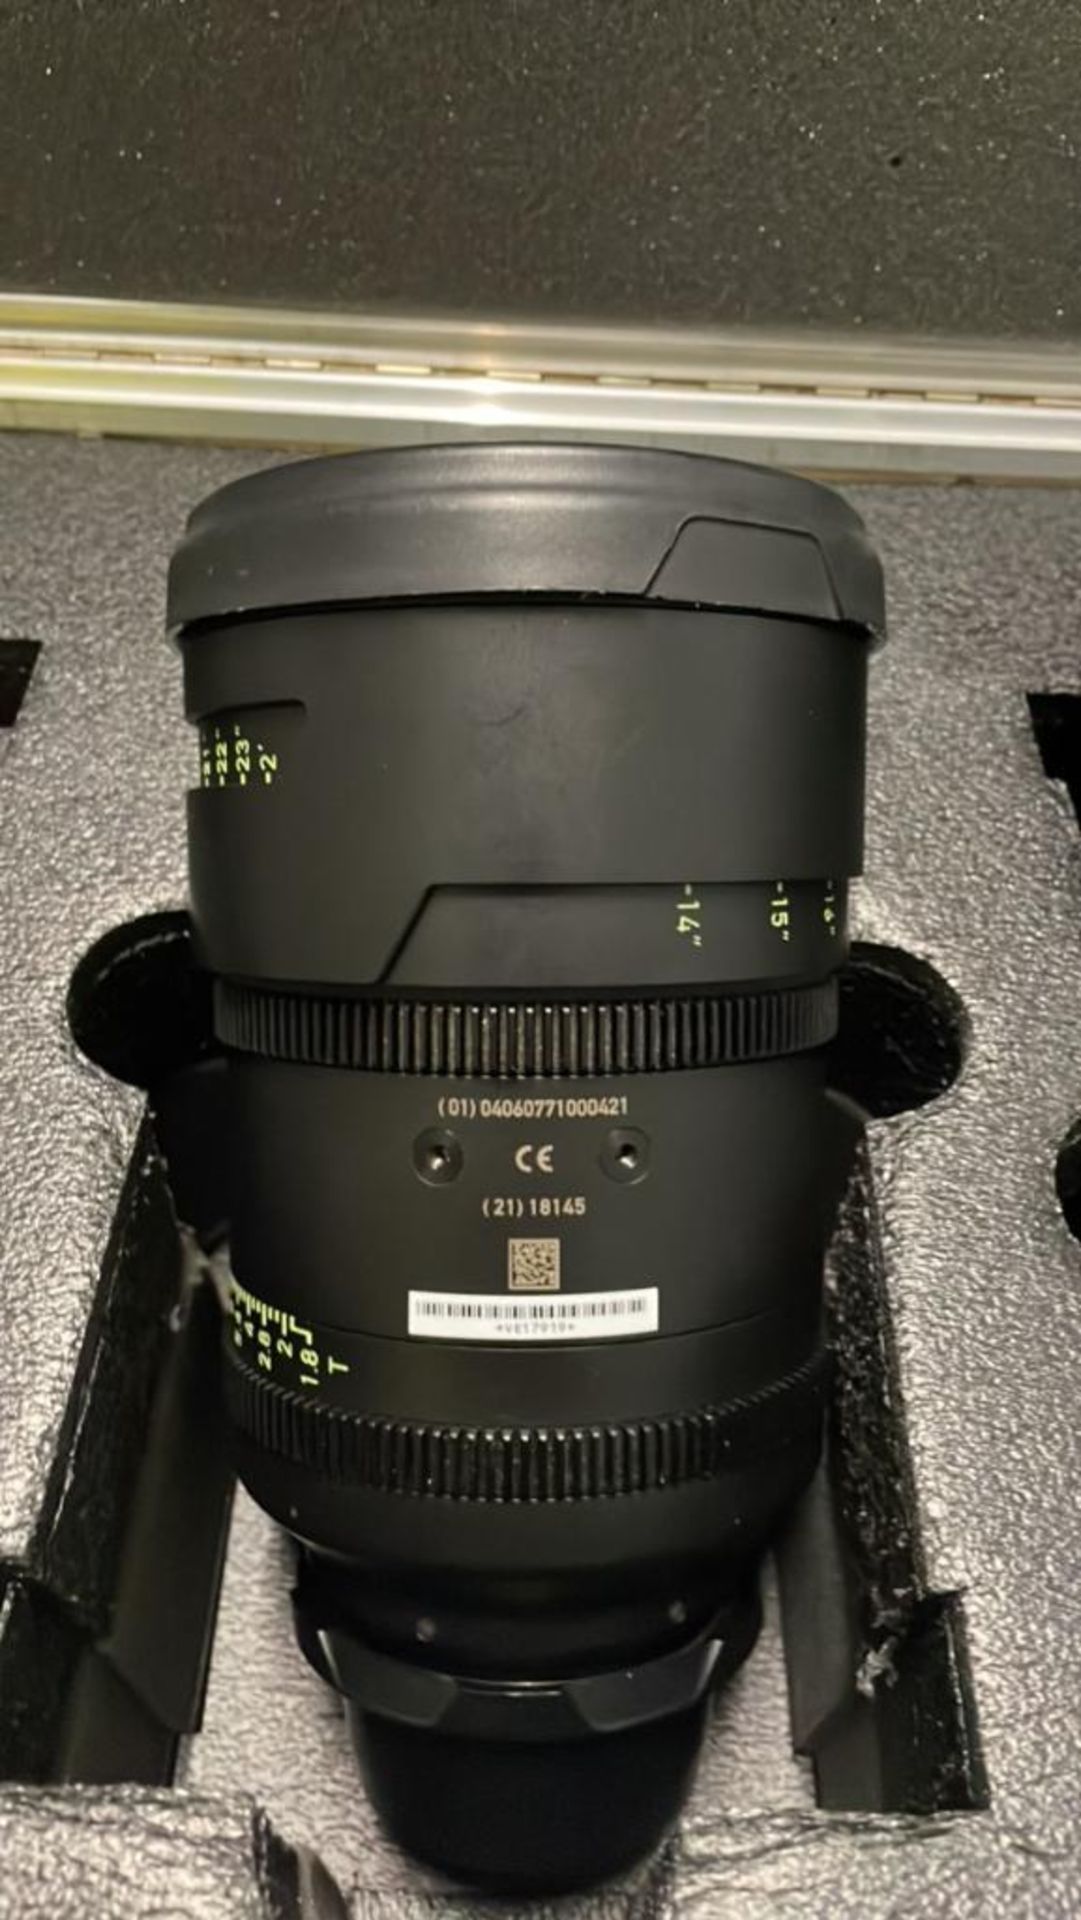 Set of 6 Arri Prime Lenses (29mm, 40mm, 85mm, 75mm, 95mm, 125mm) 2 flight case SN 18145, SN 53570, S - Image 12 of 15